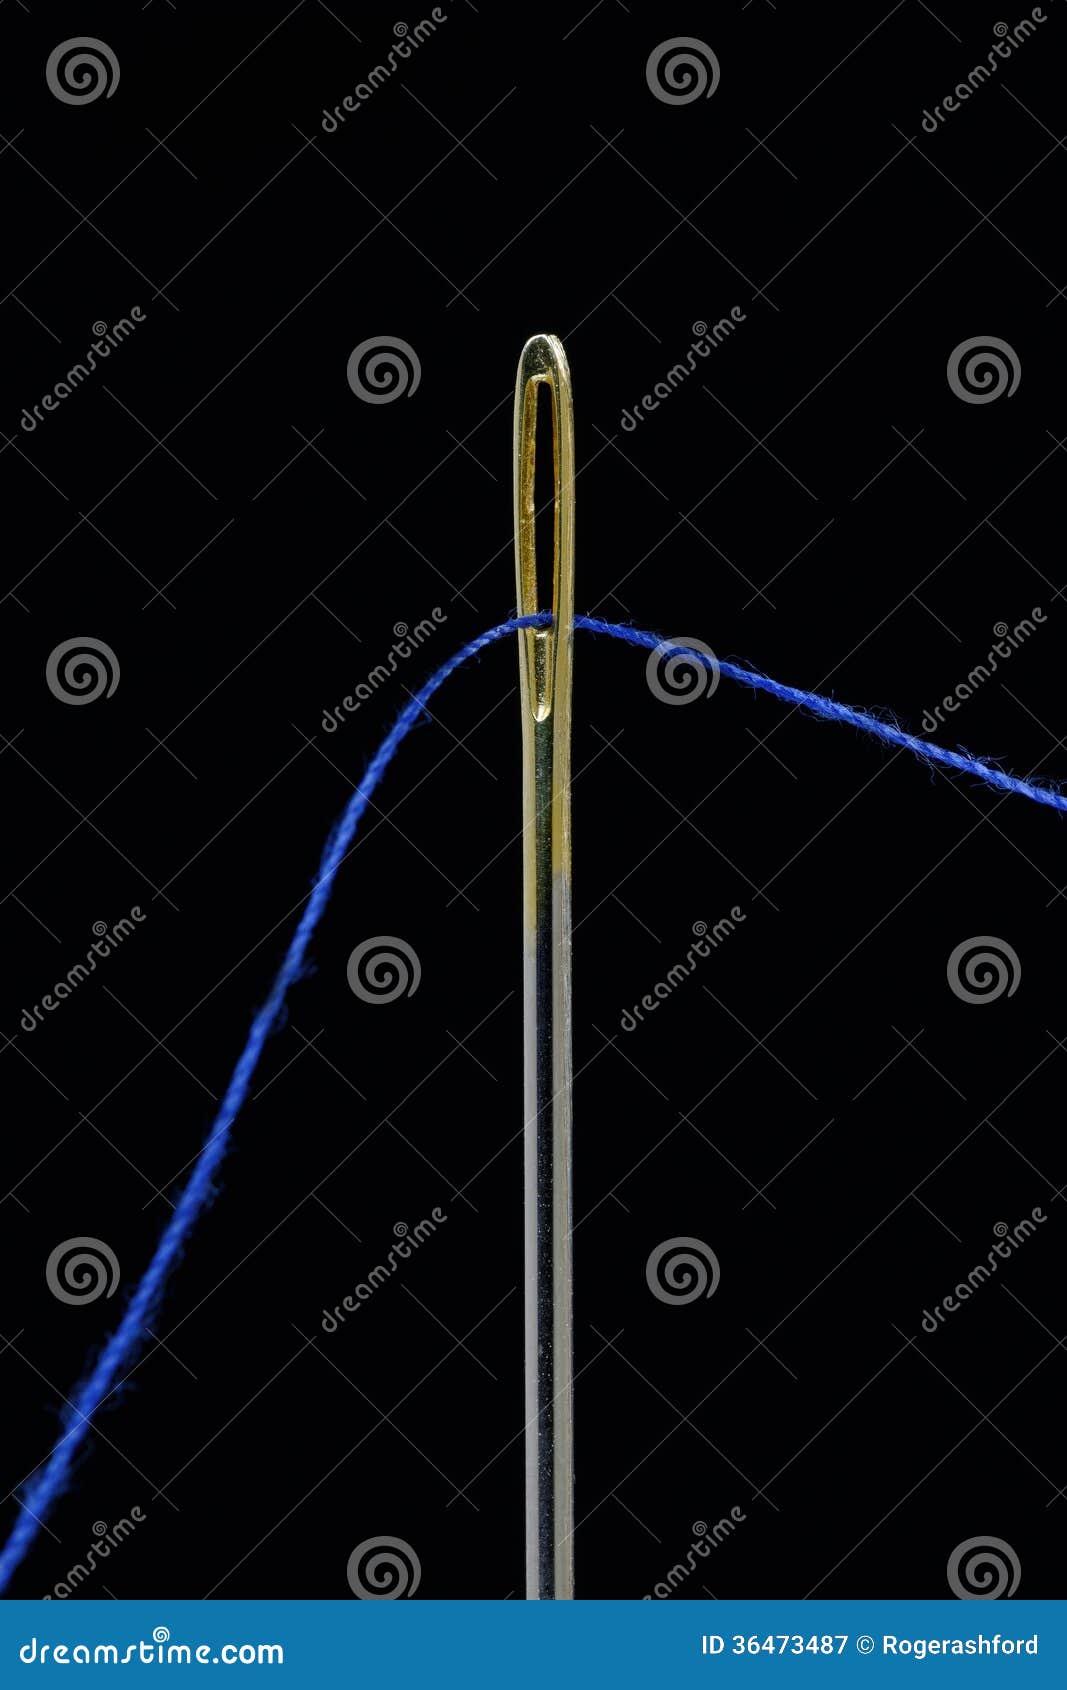 Sewing Needle Closeup stock image. Image of tool, reel - 36473487